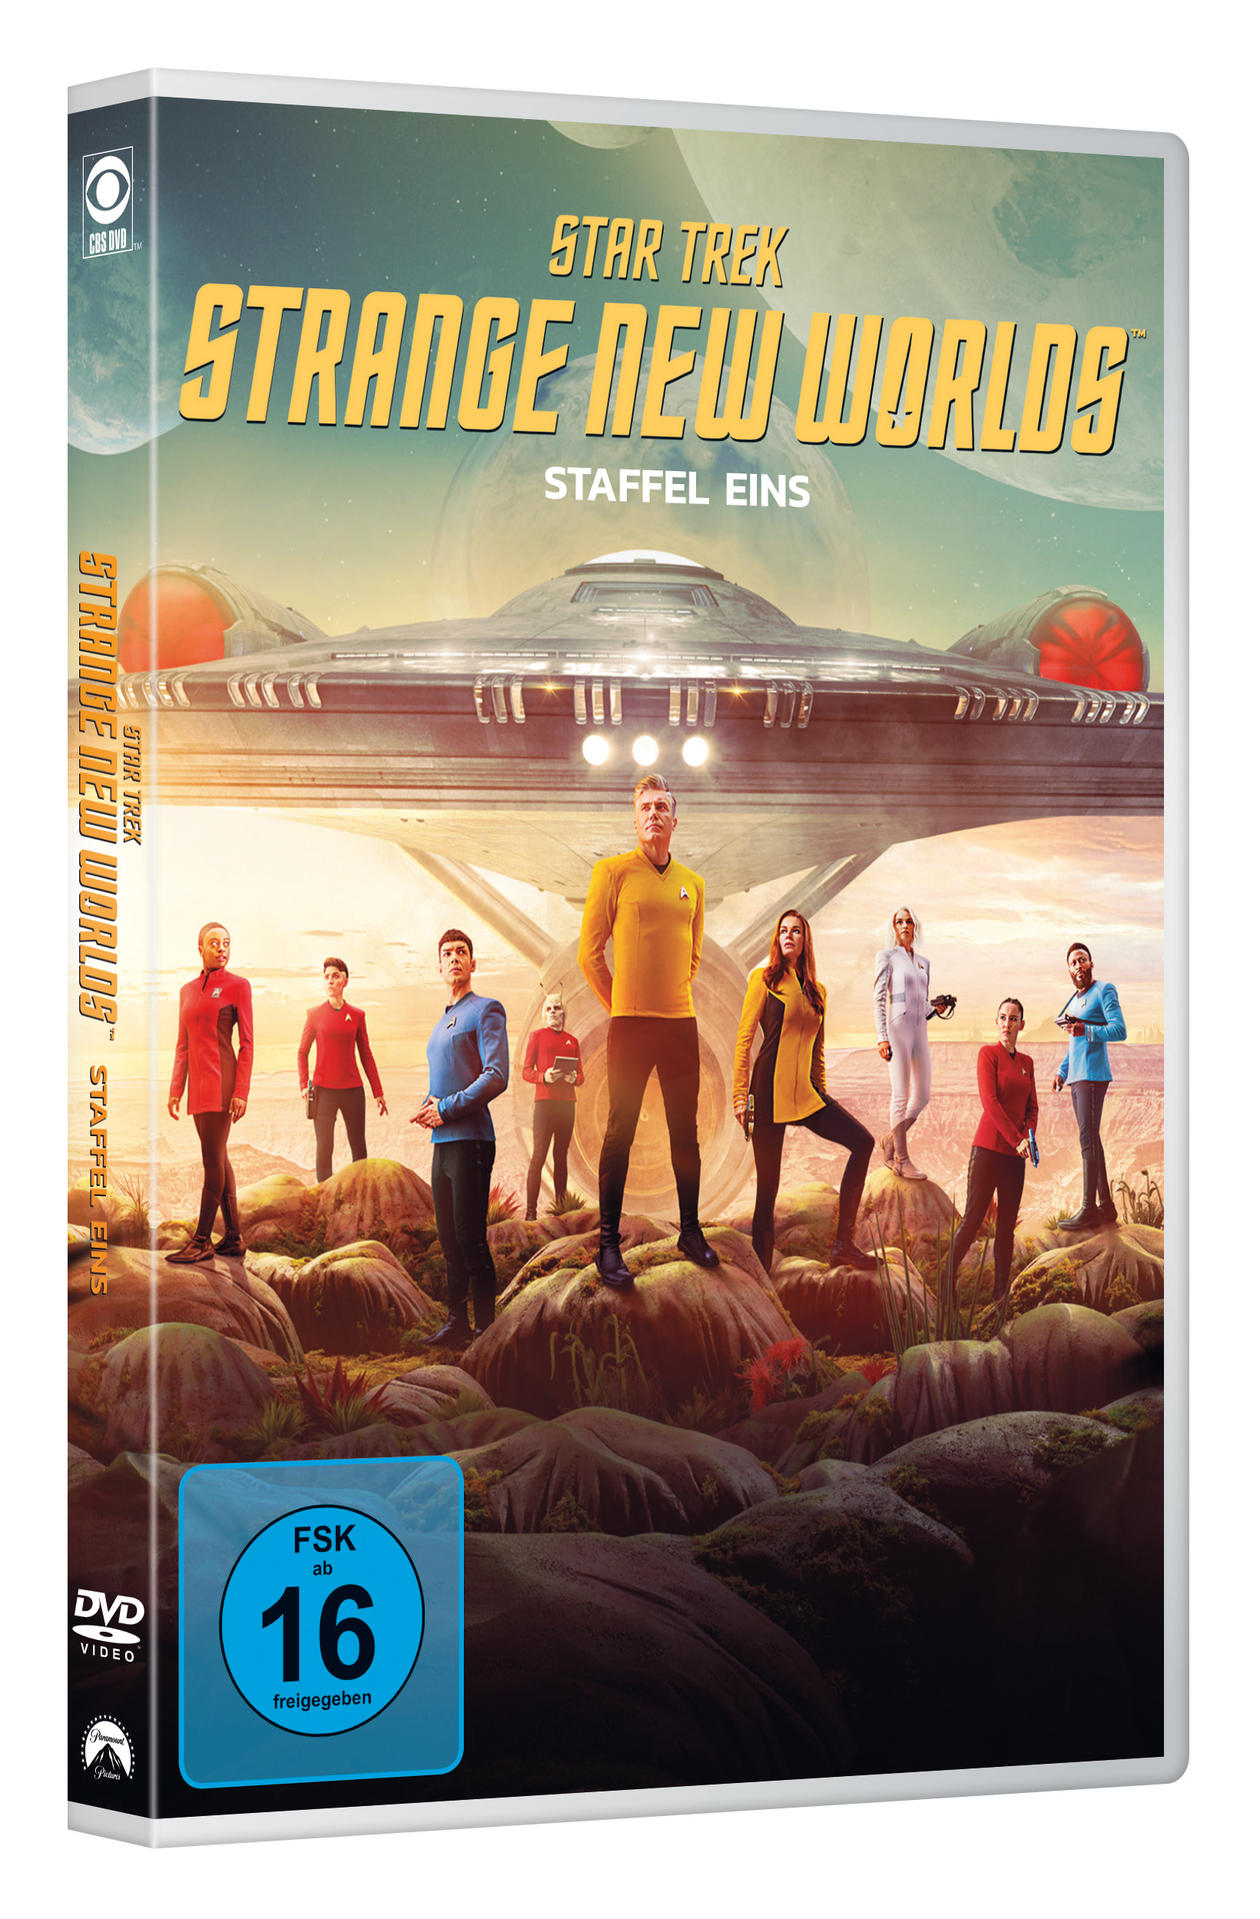 Star Trek: Strange New Worlds DVD 1 - Staffel